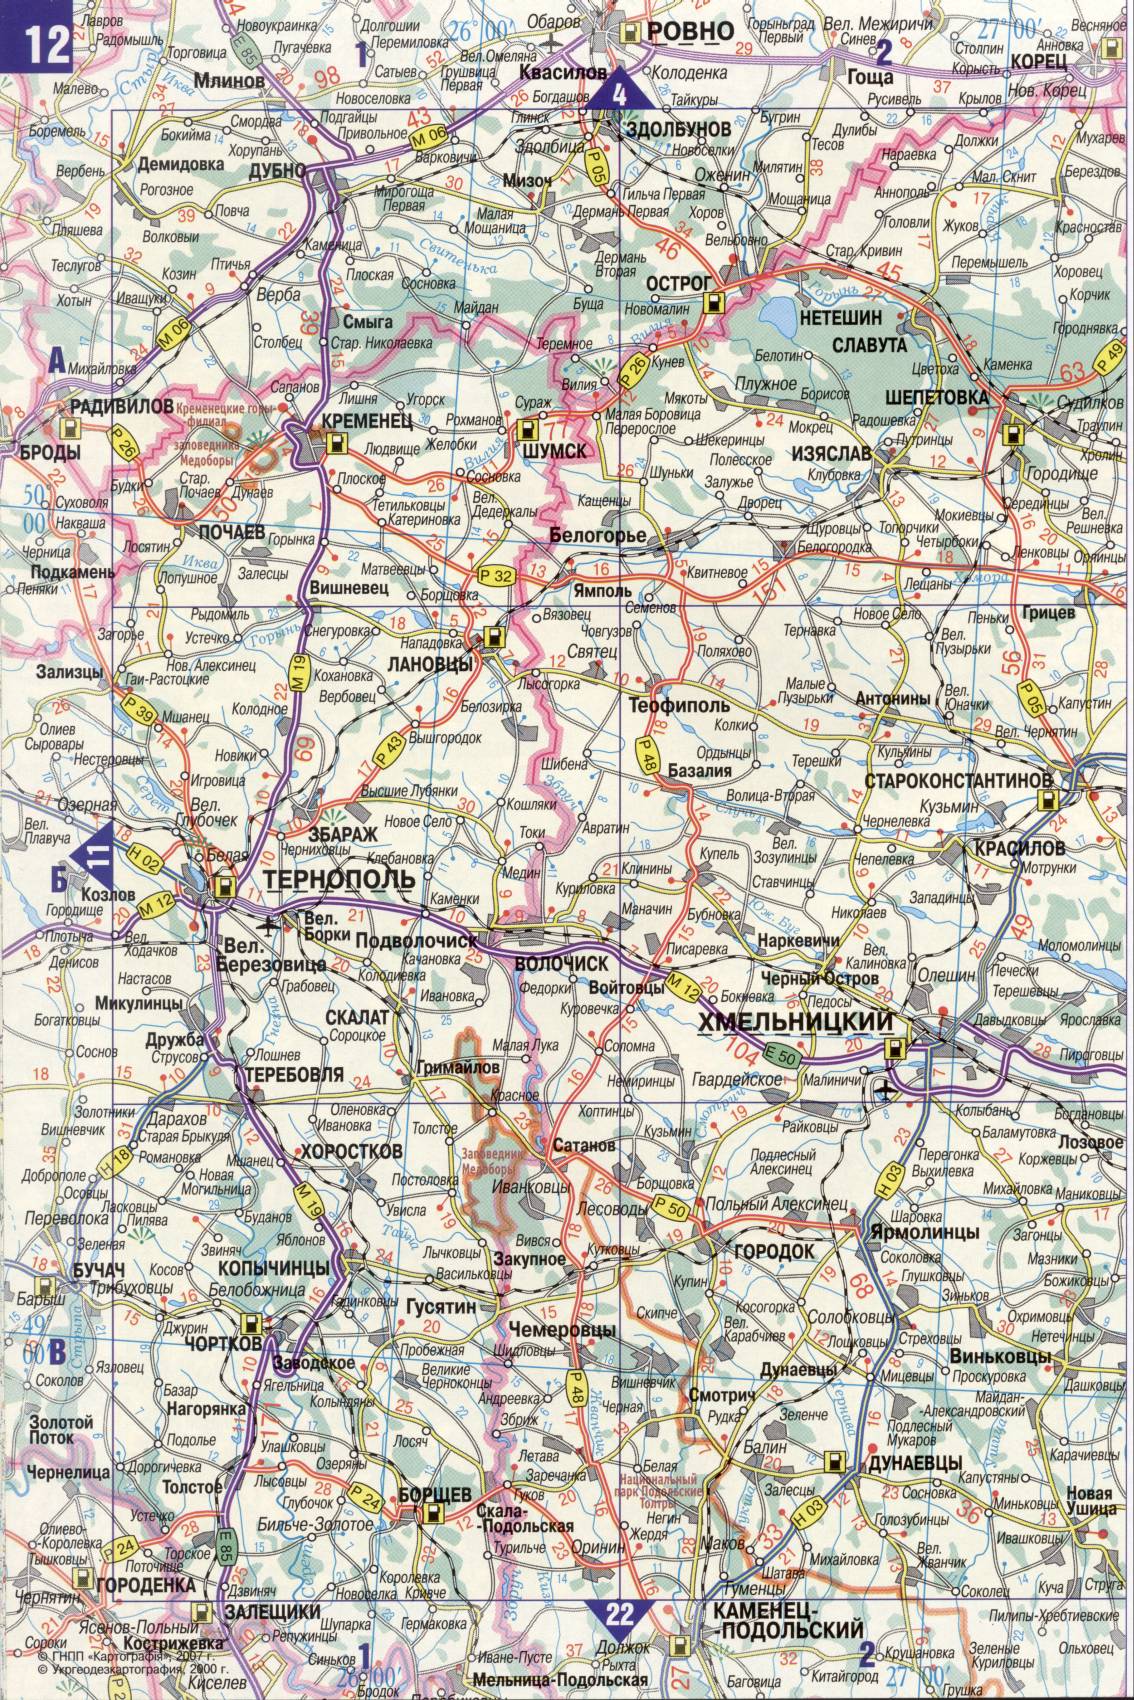 Map of Ukraine. Detailed road map of Ukraine avtomobilnog satin. download free, C1